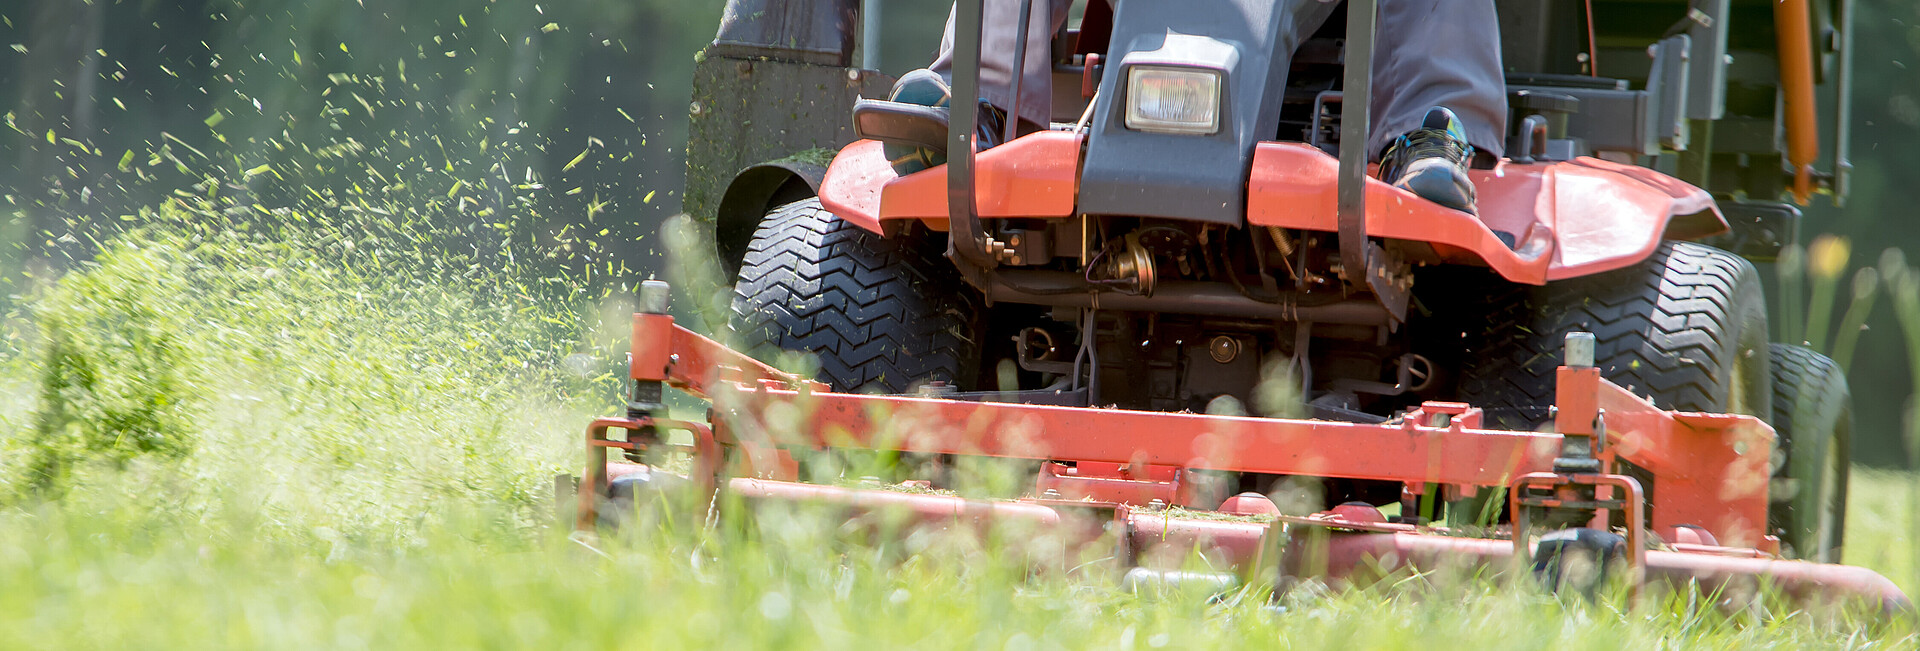 Rasenmäher-Traktor fährt über den Rasen